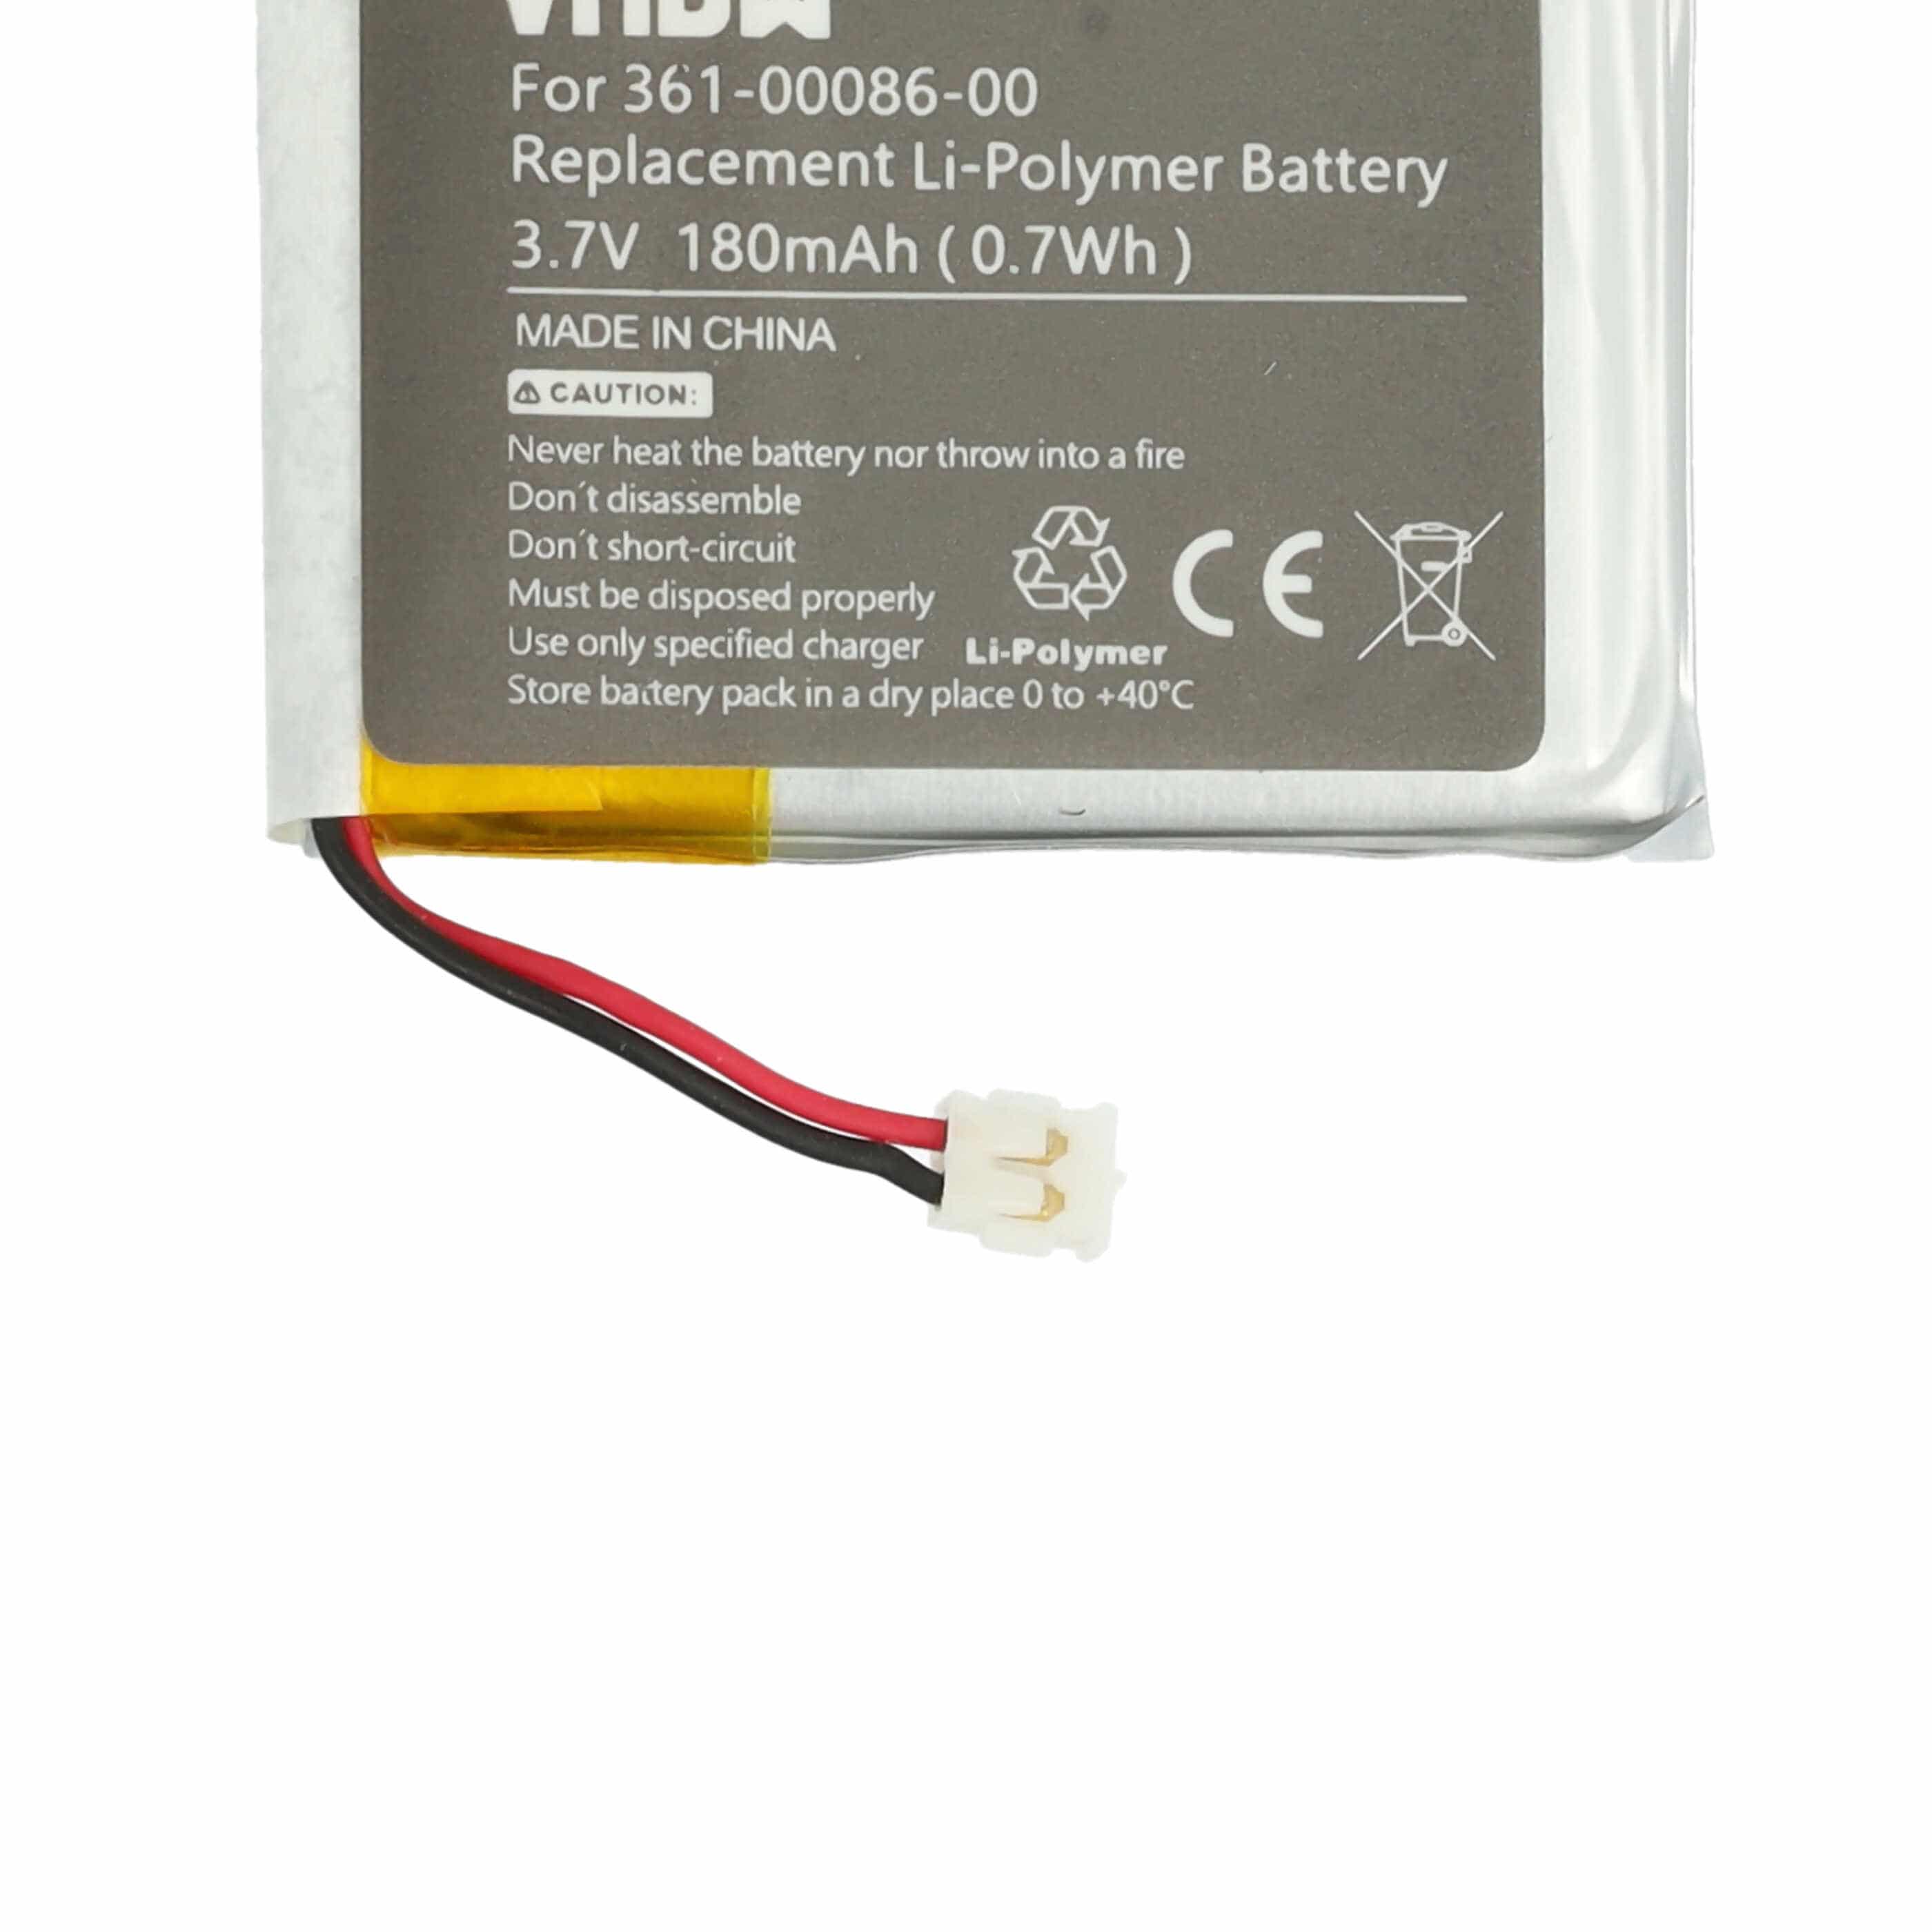 Smartwatch Battery Replacement for Garmin 361-00072-10, 361-00072-00 - 180mAh 3.7V Li-polymer + Tools